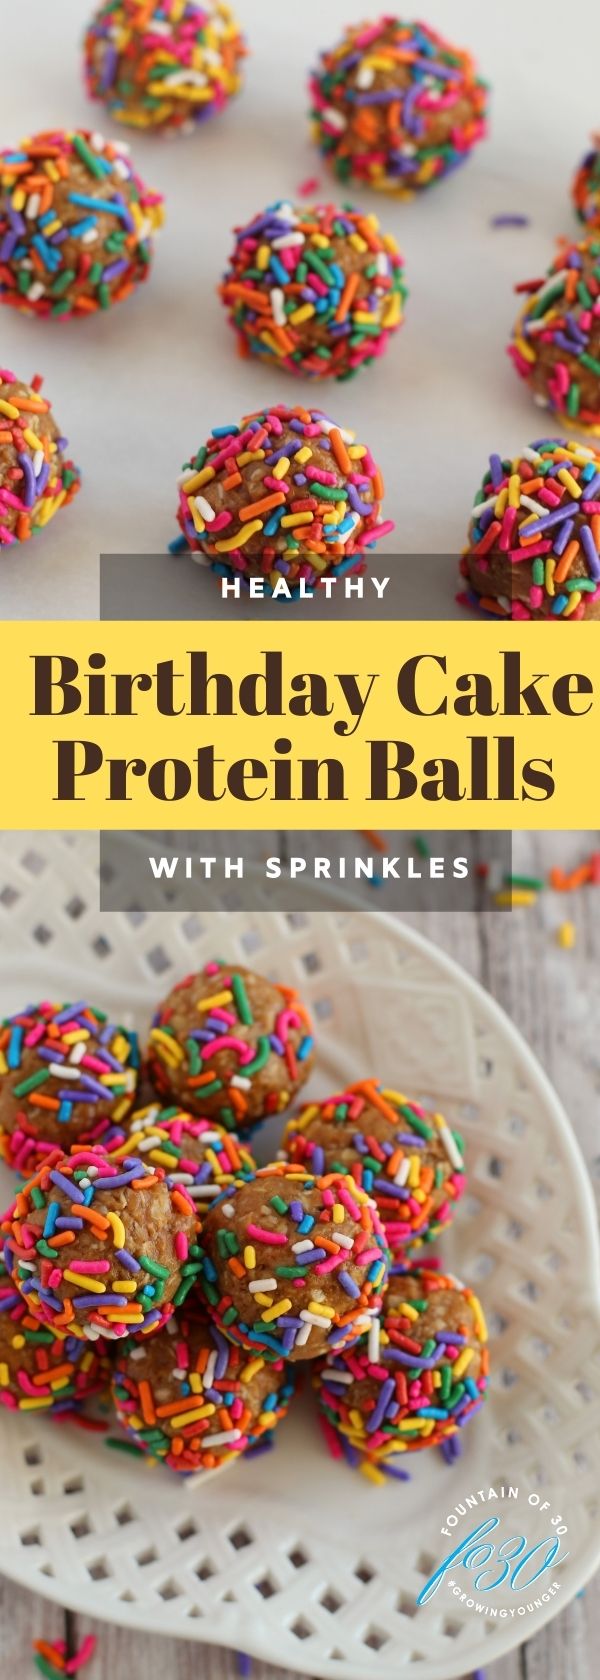 healthy birthday cake protein balls recipe fountainof30